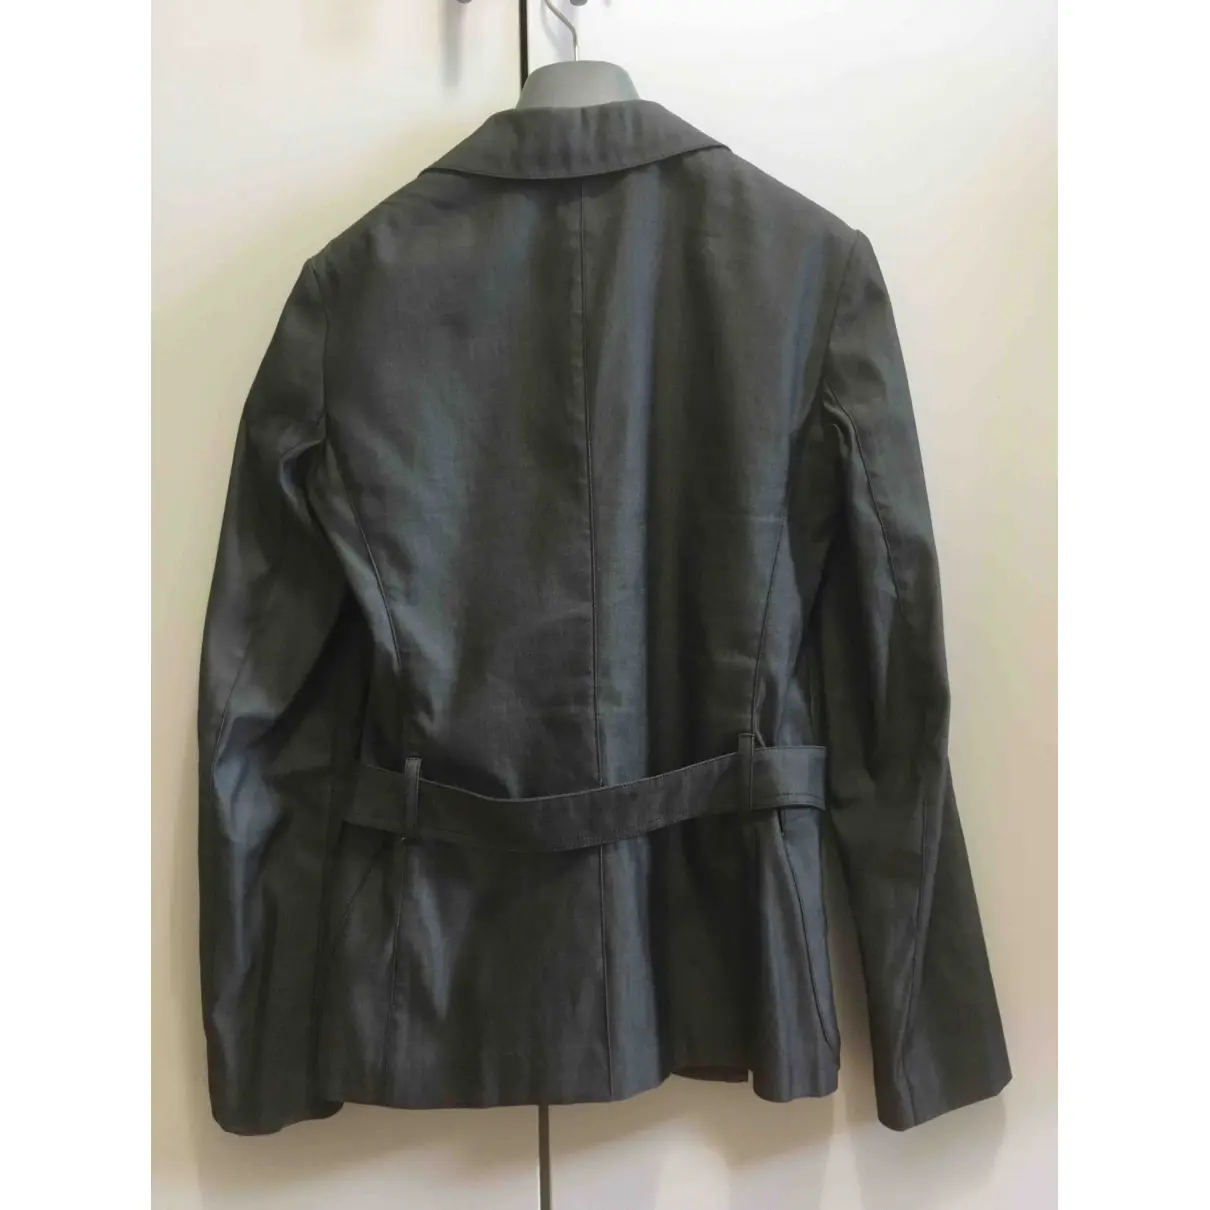 Buy Prada Suit jacket online